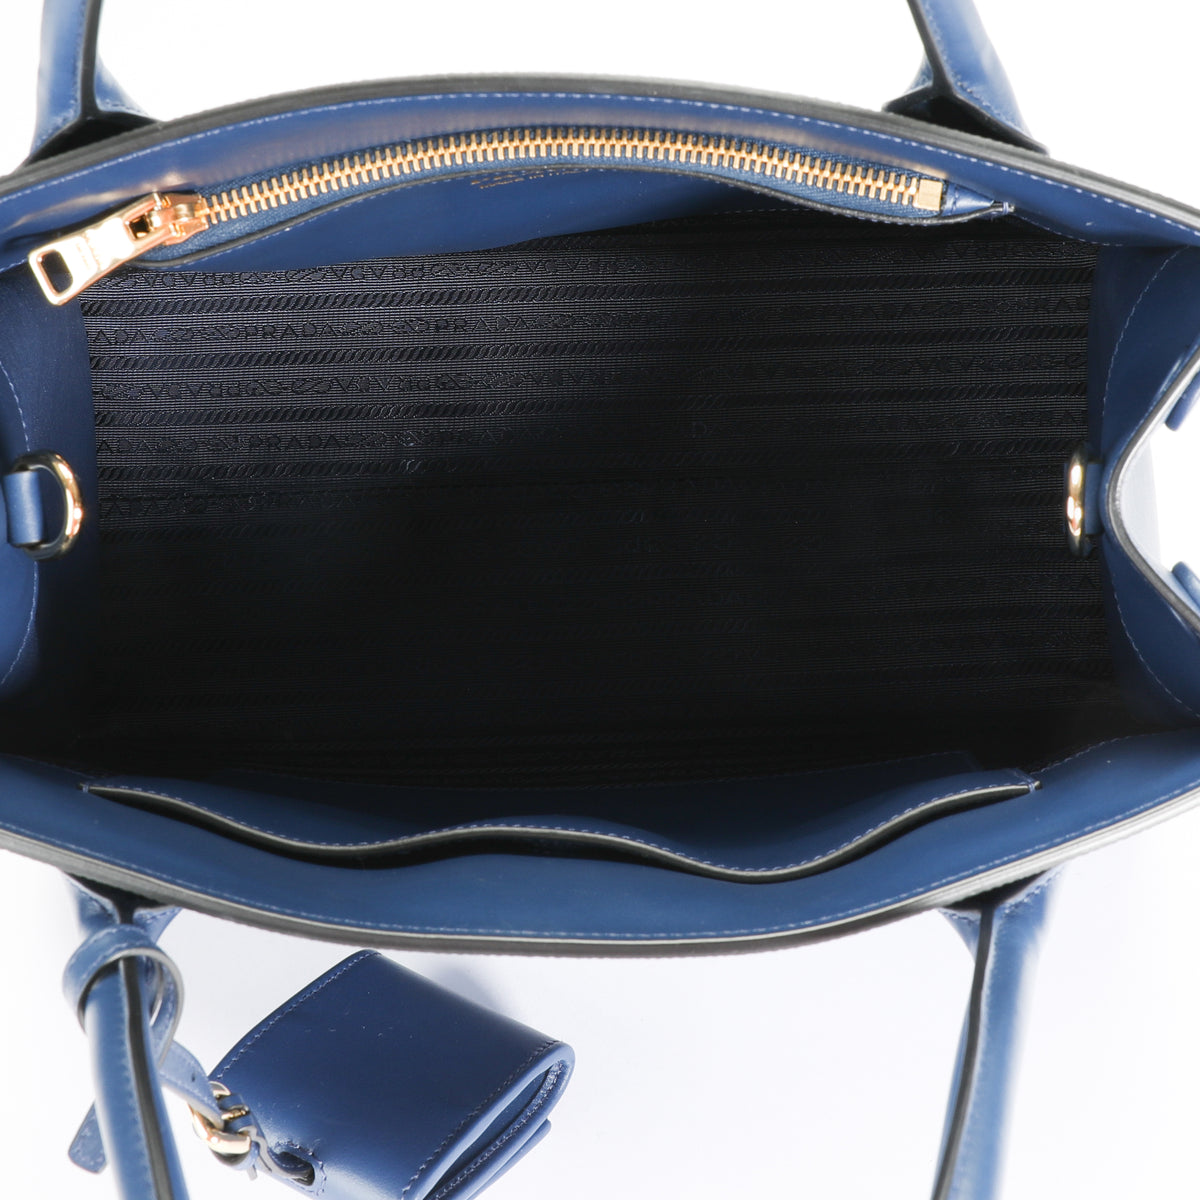 Bluette Large Prada Galleria Saffiano leather bag